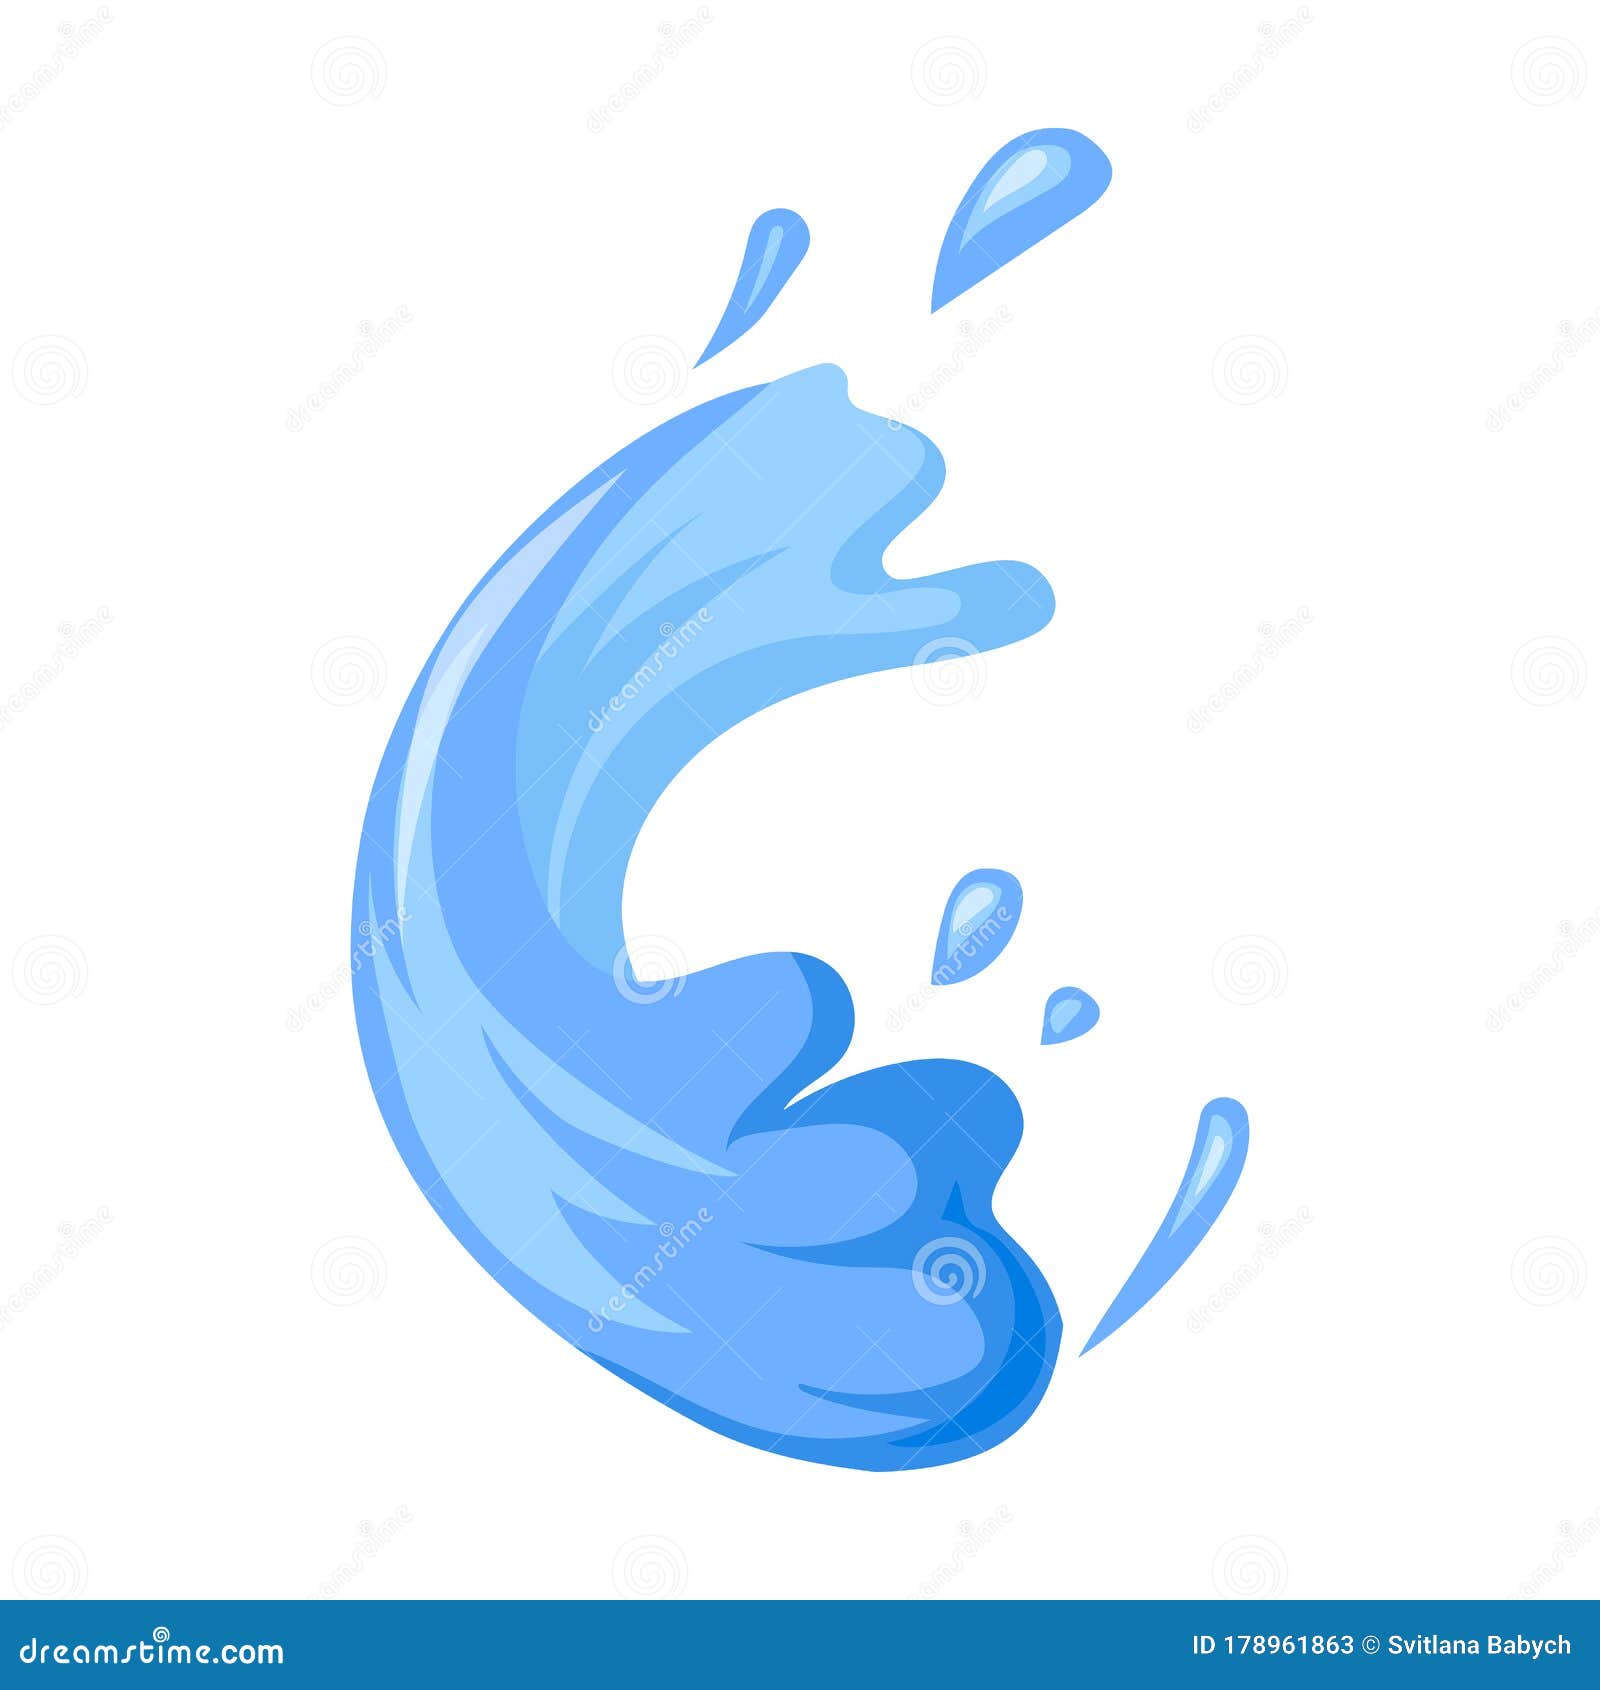 Water Splash Vector  Vector Icon Isolated on White Background  Water Splash. Stock Vector - Illustration of falling, liquid: 178961863